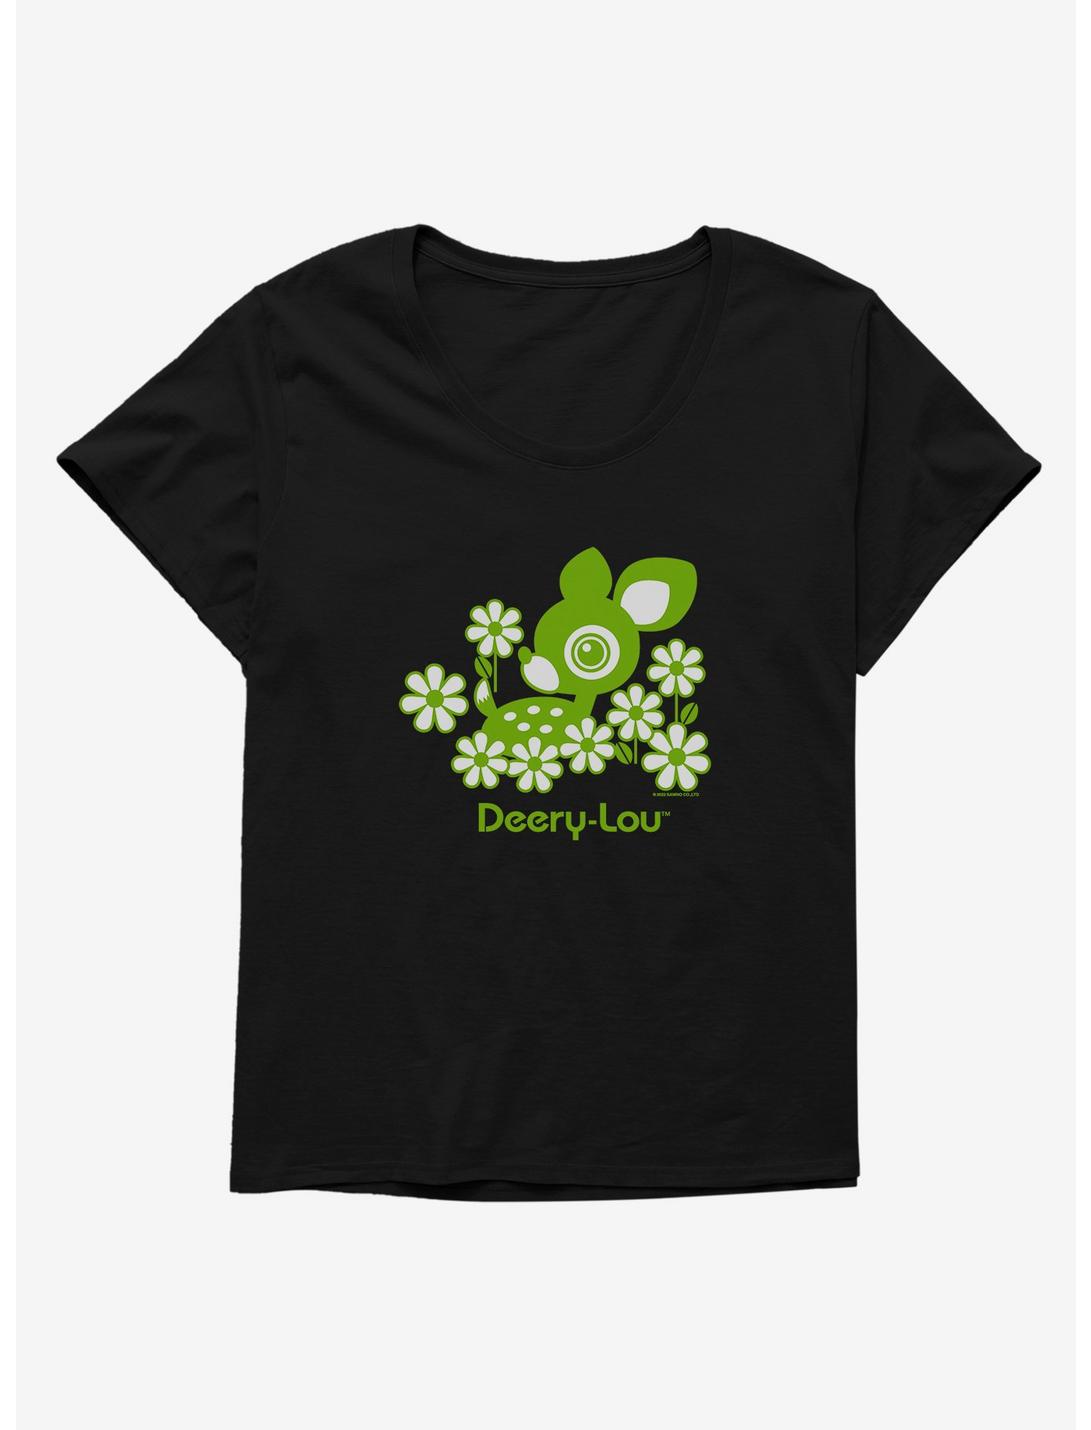 Deery-Lou Floral Green Design Womens T-Shirt Plus Size, , hi-res